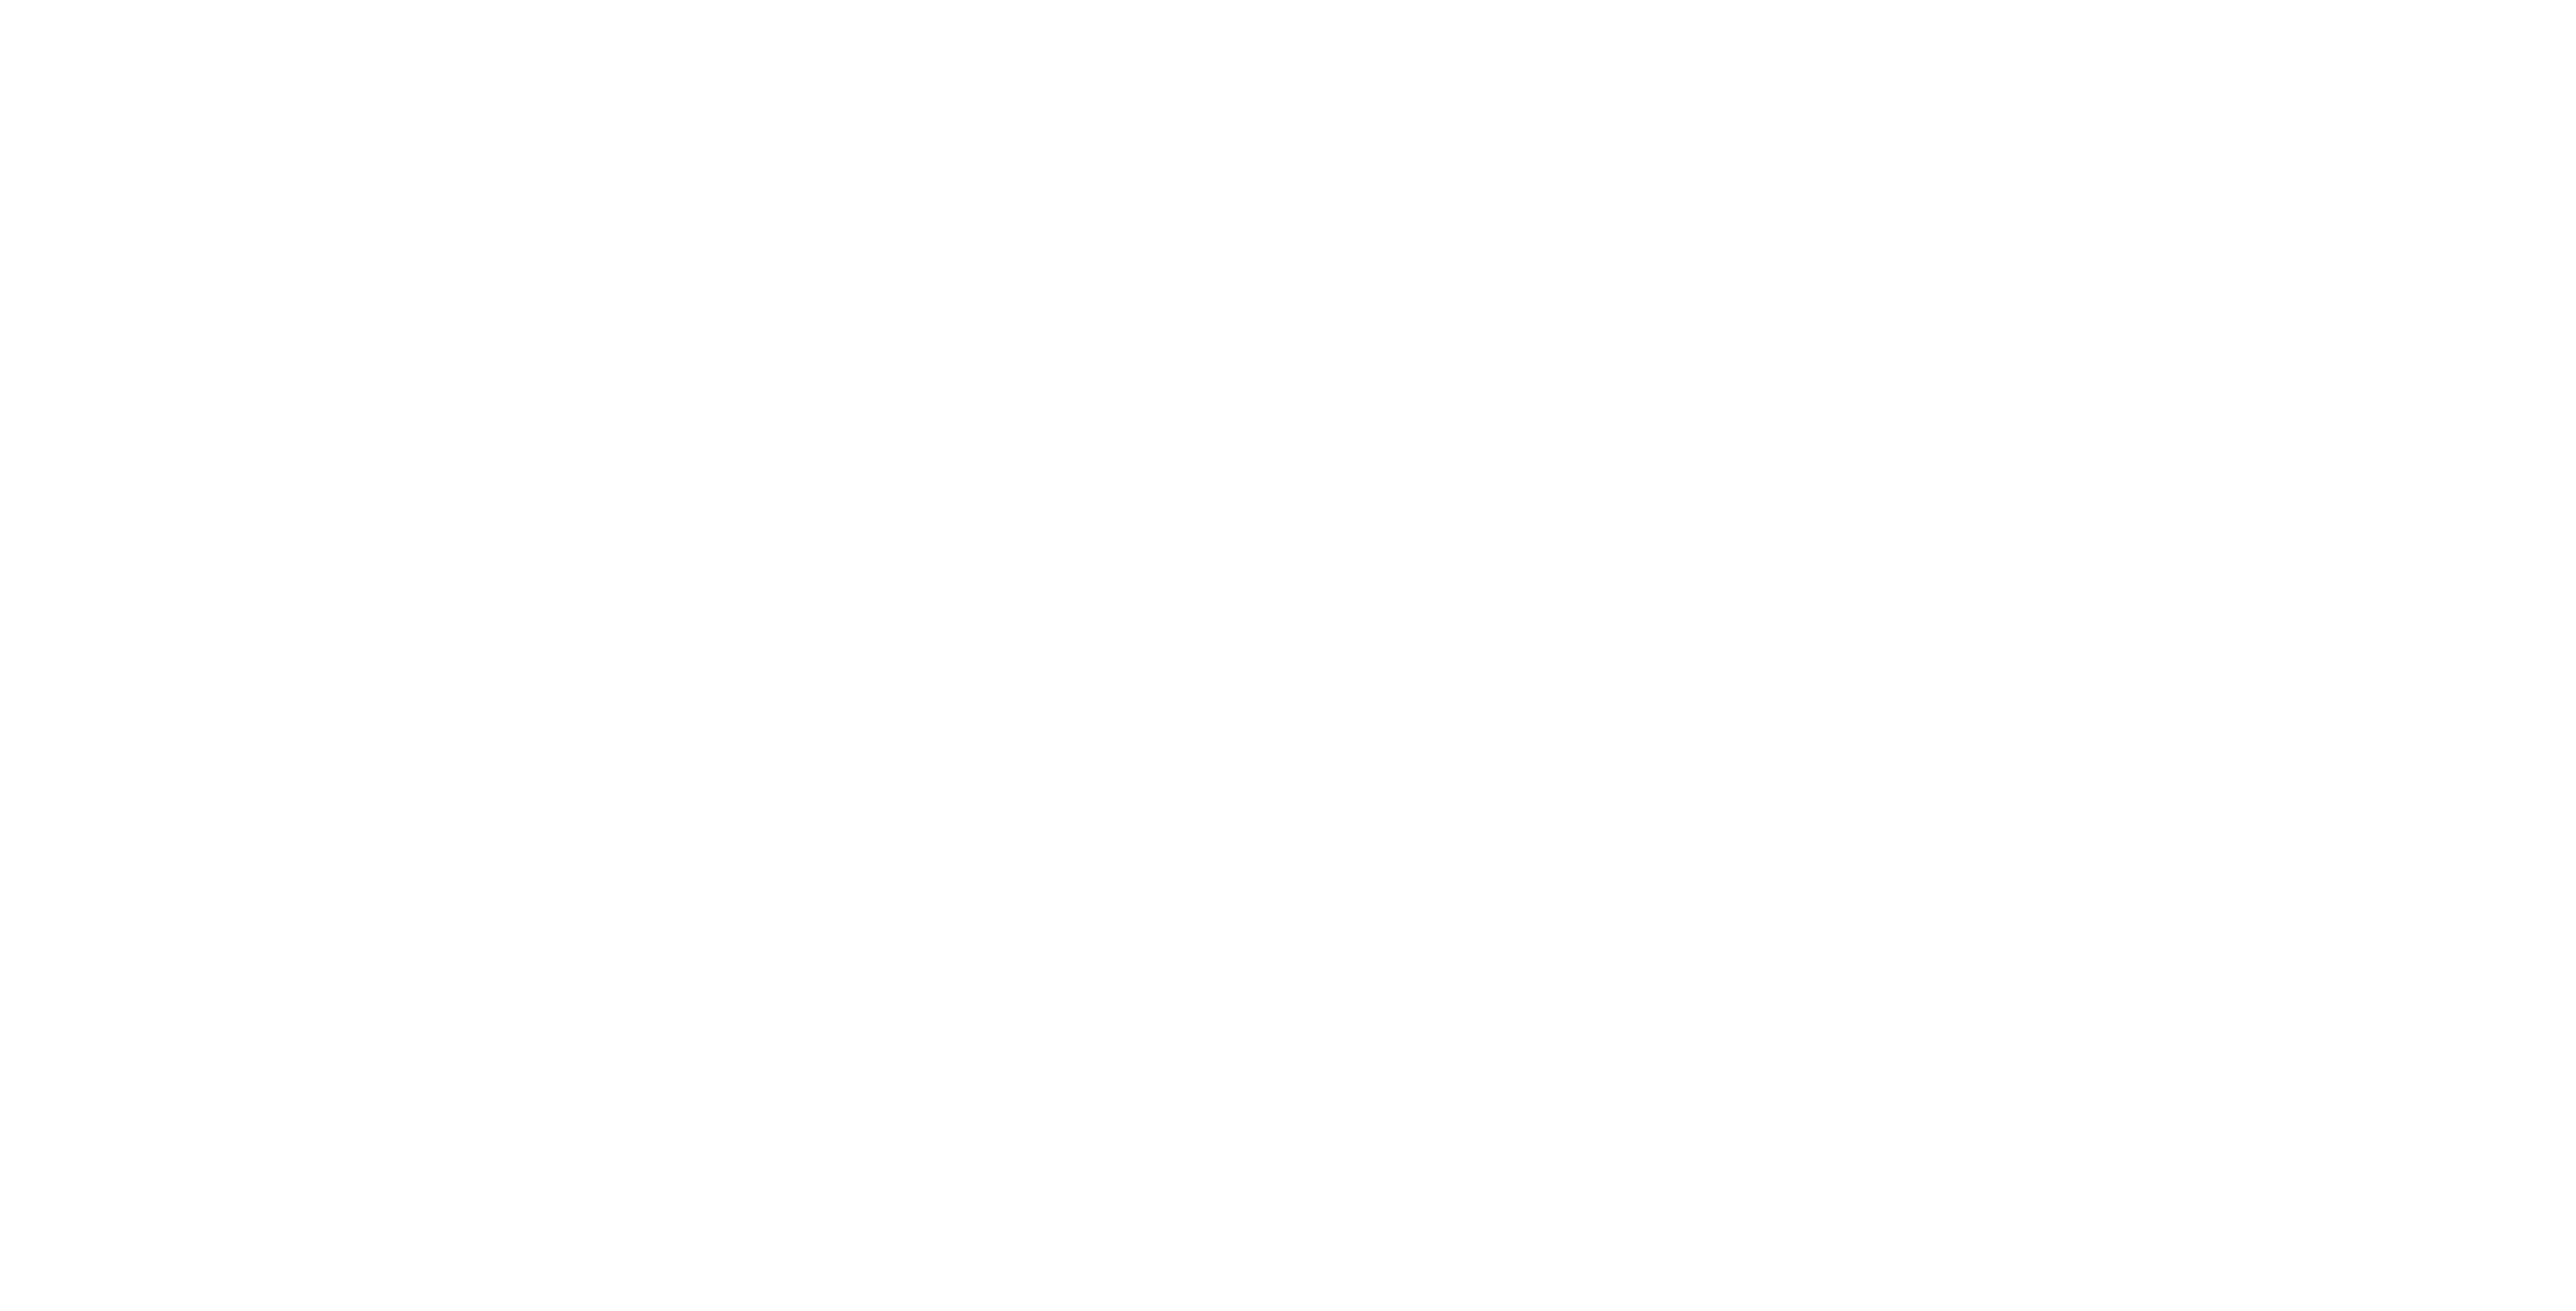 Dairy Explorer since 1949